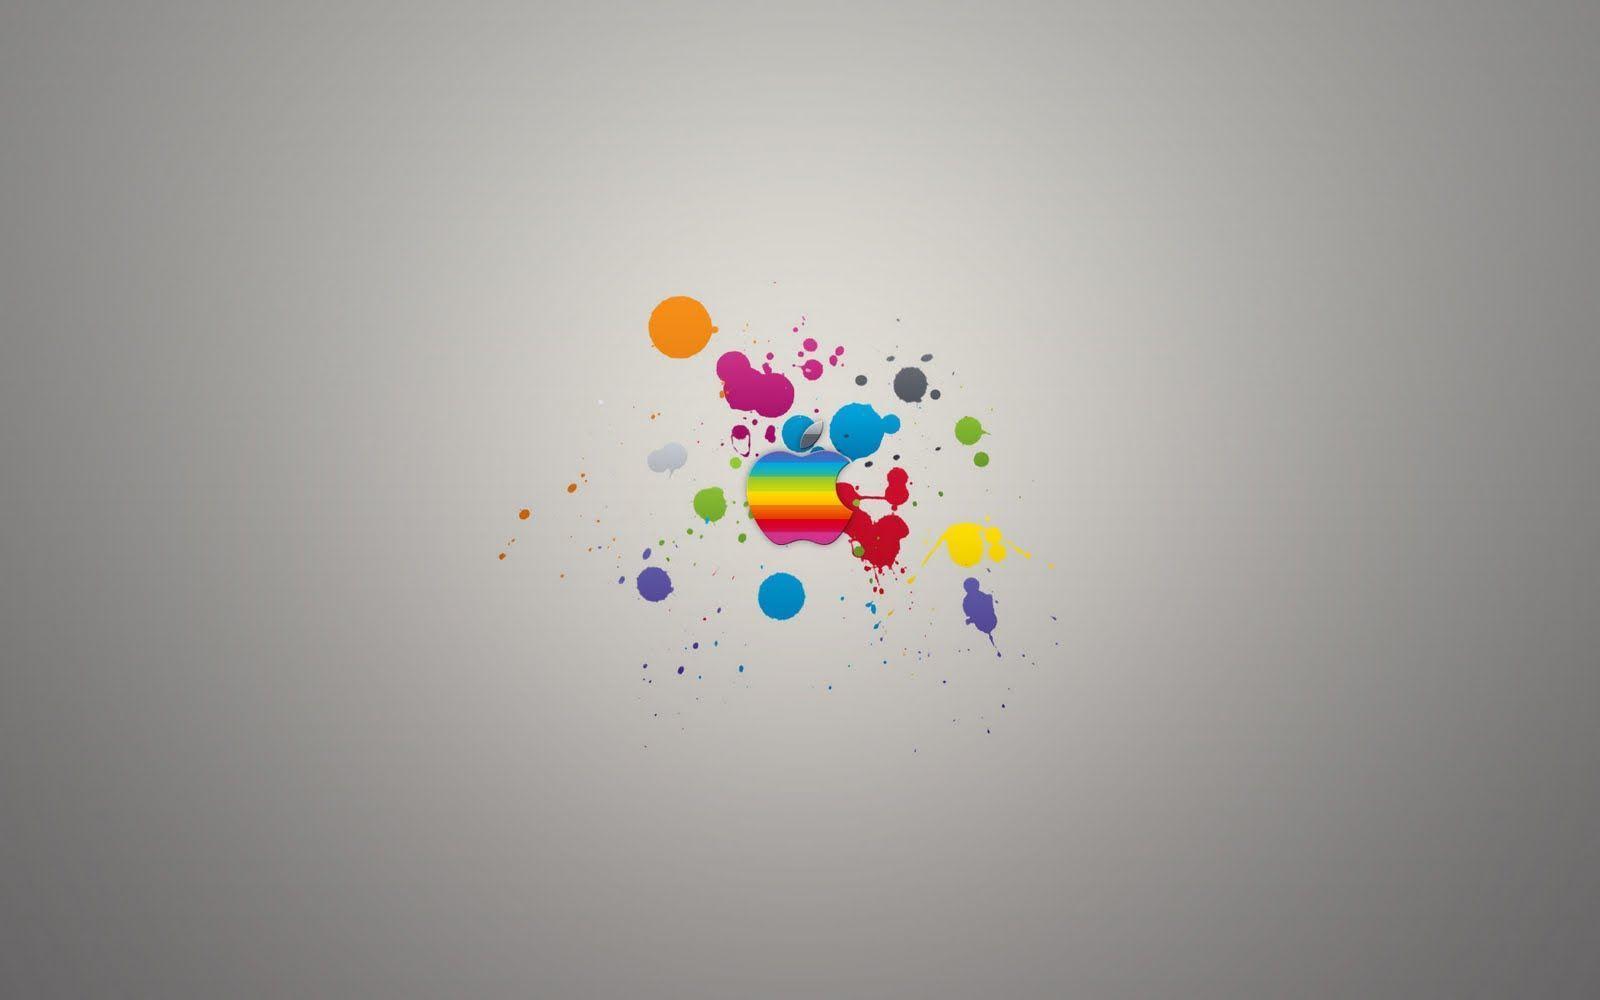 Download Fantastic Apple Logo In Mac Os Lion Wallpaper. Full HD